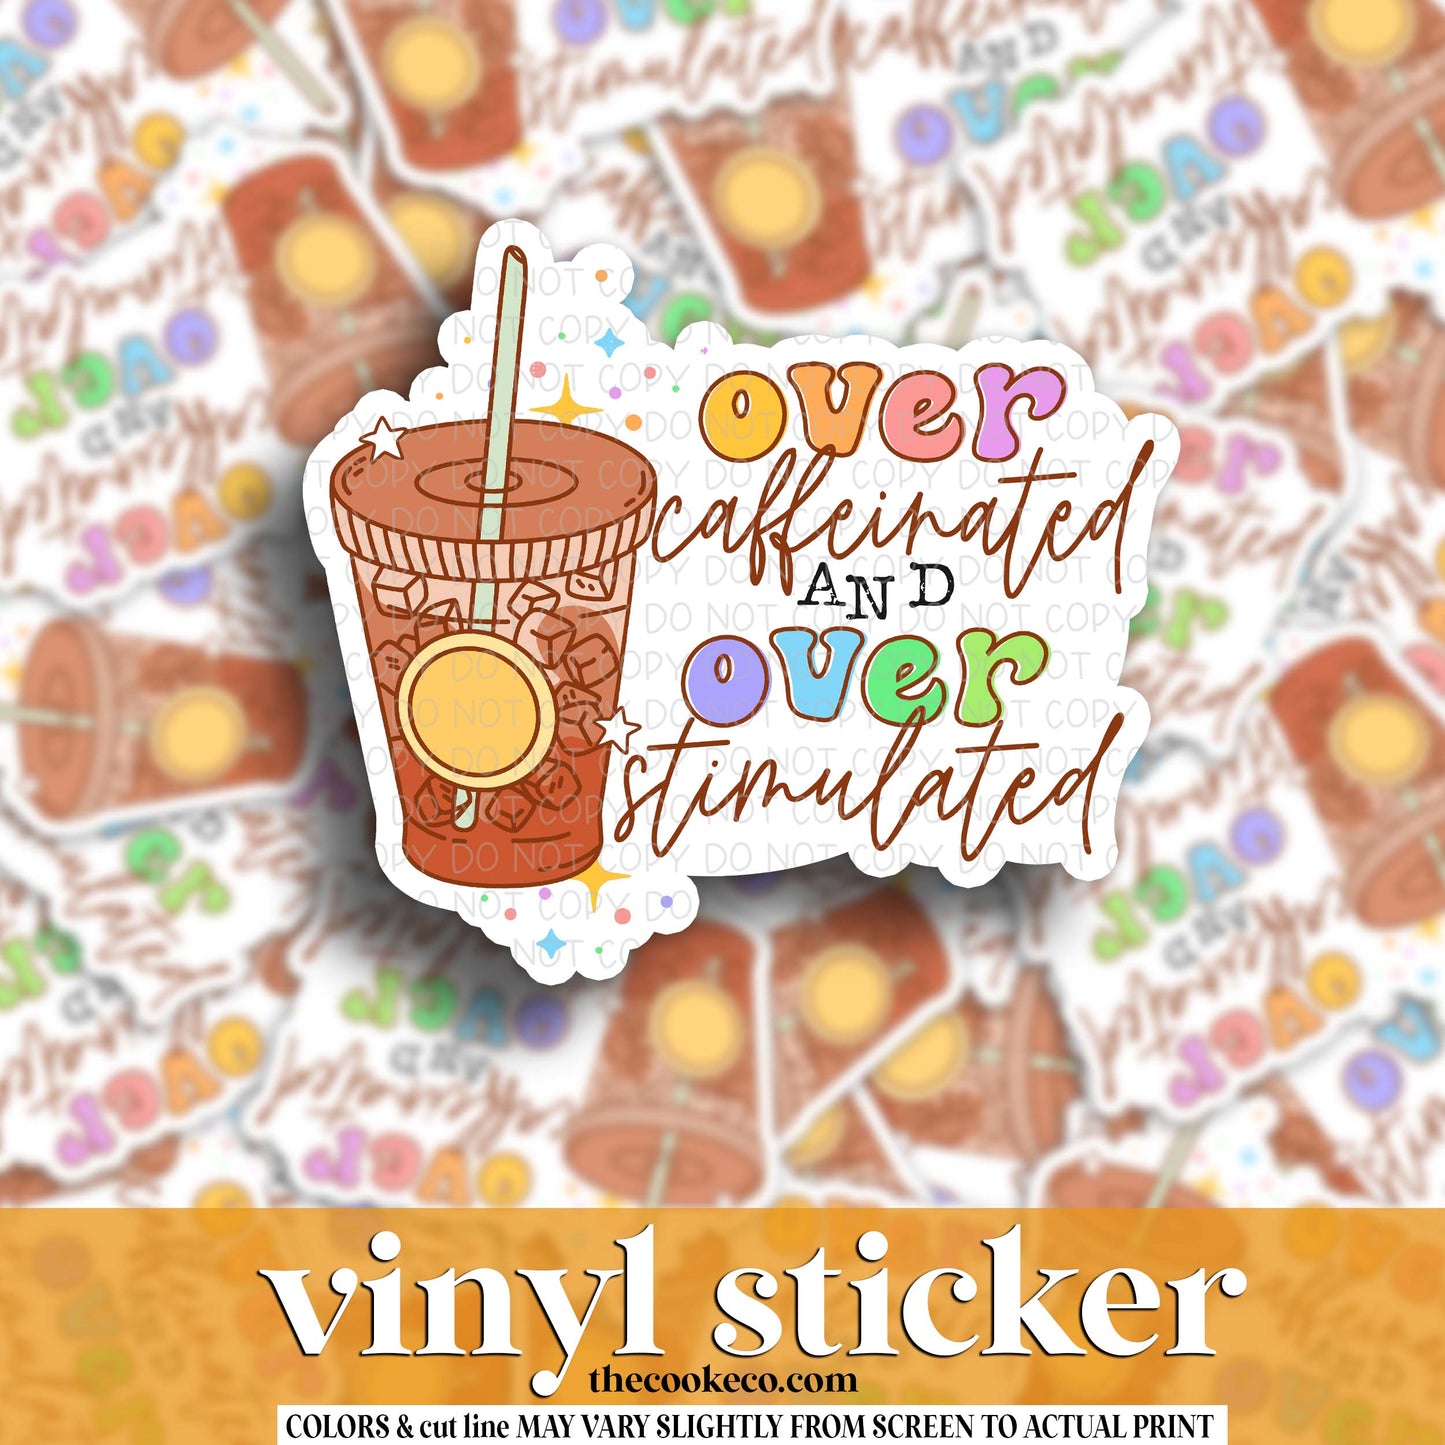 Vinyl Sticker | #V1696 - OVER CAFFEINATED AND OVER STIMULATED